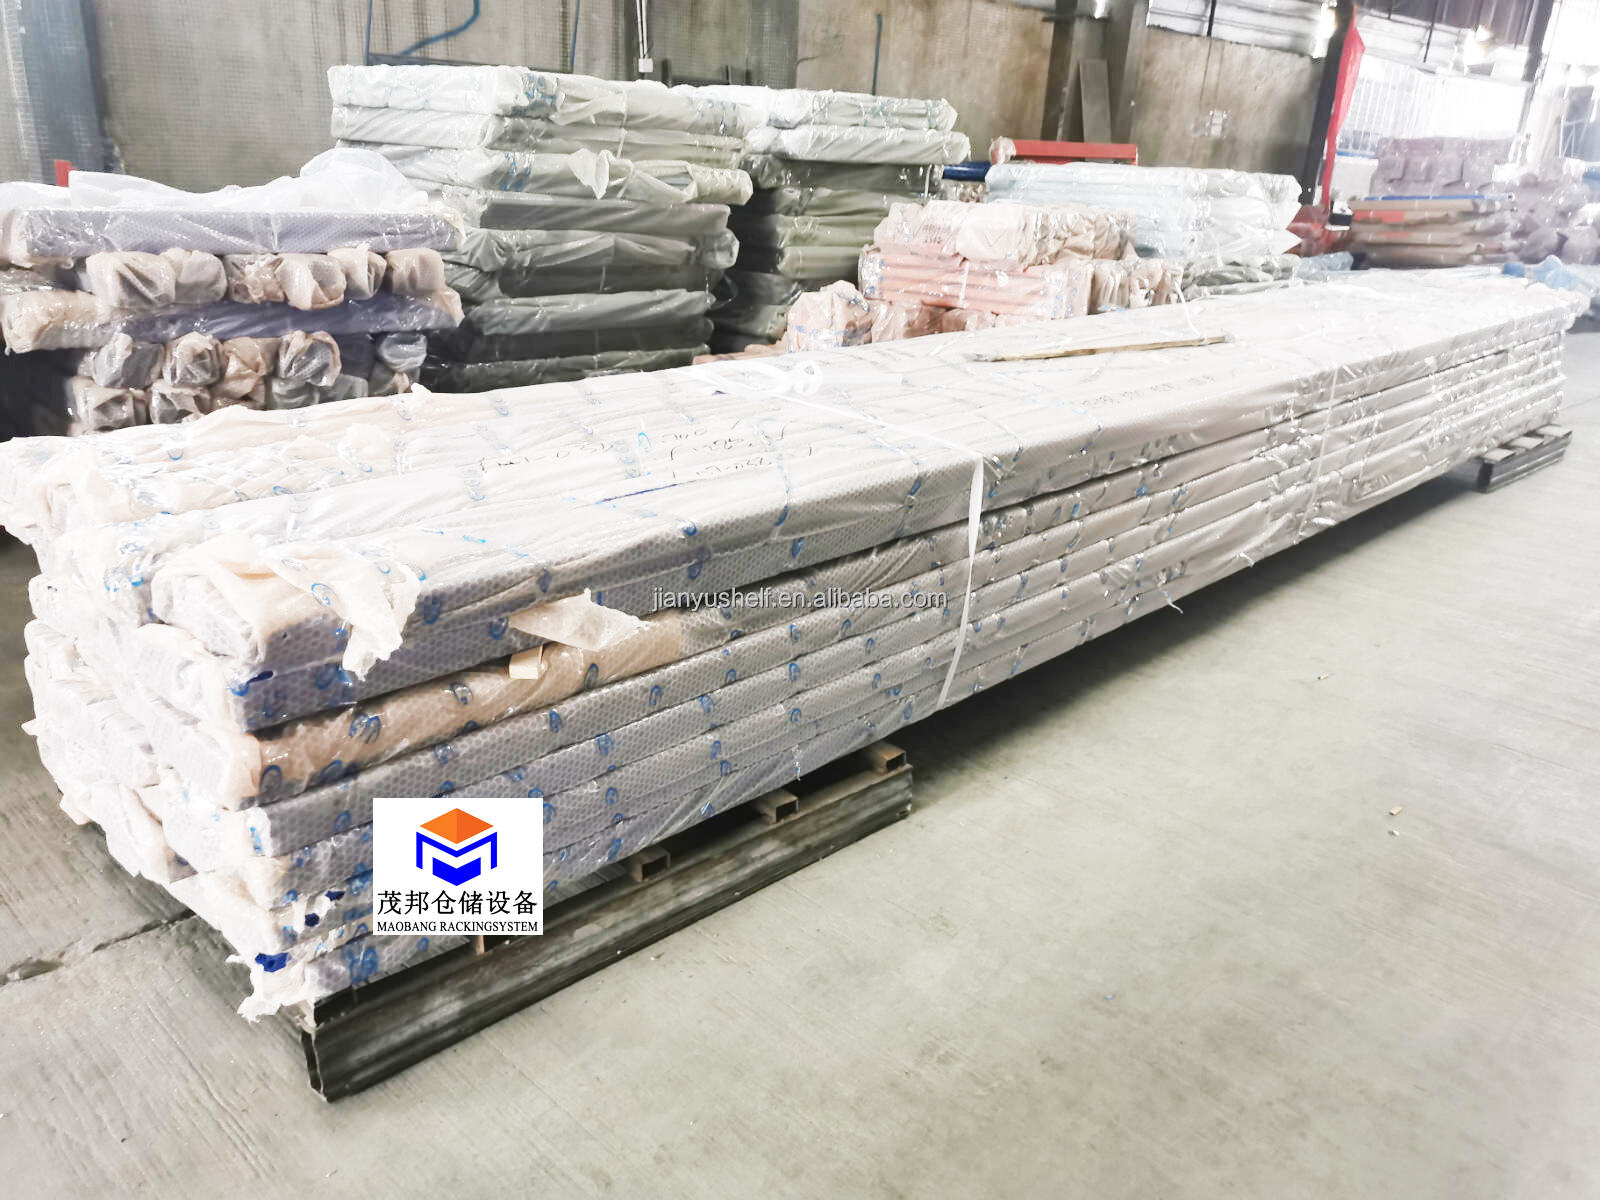 Industrial high quality pallet rack system warehouse storage shelf metal storage heavy duty rack supplier